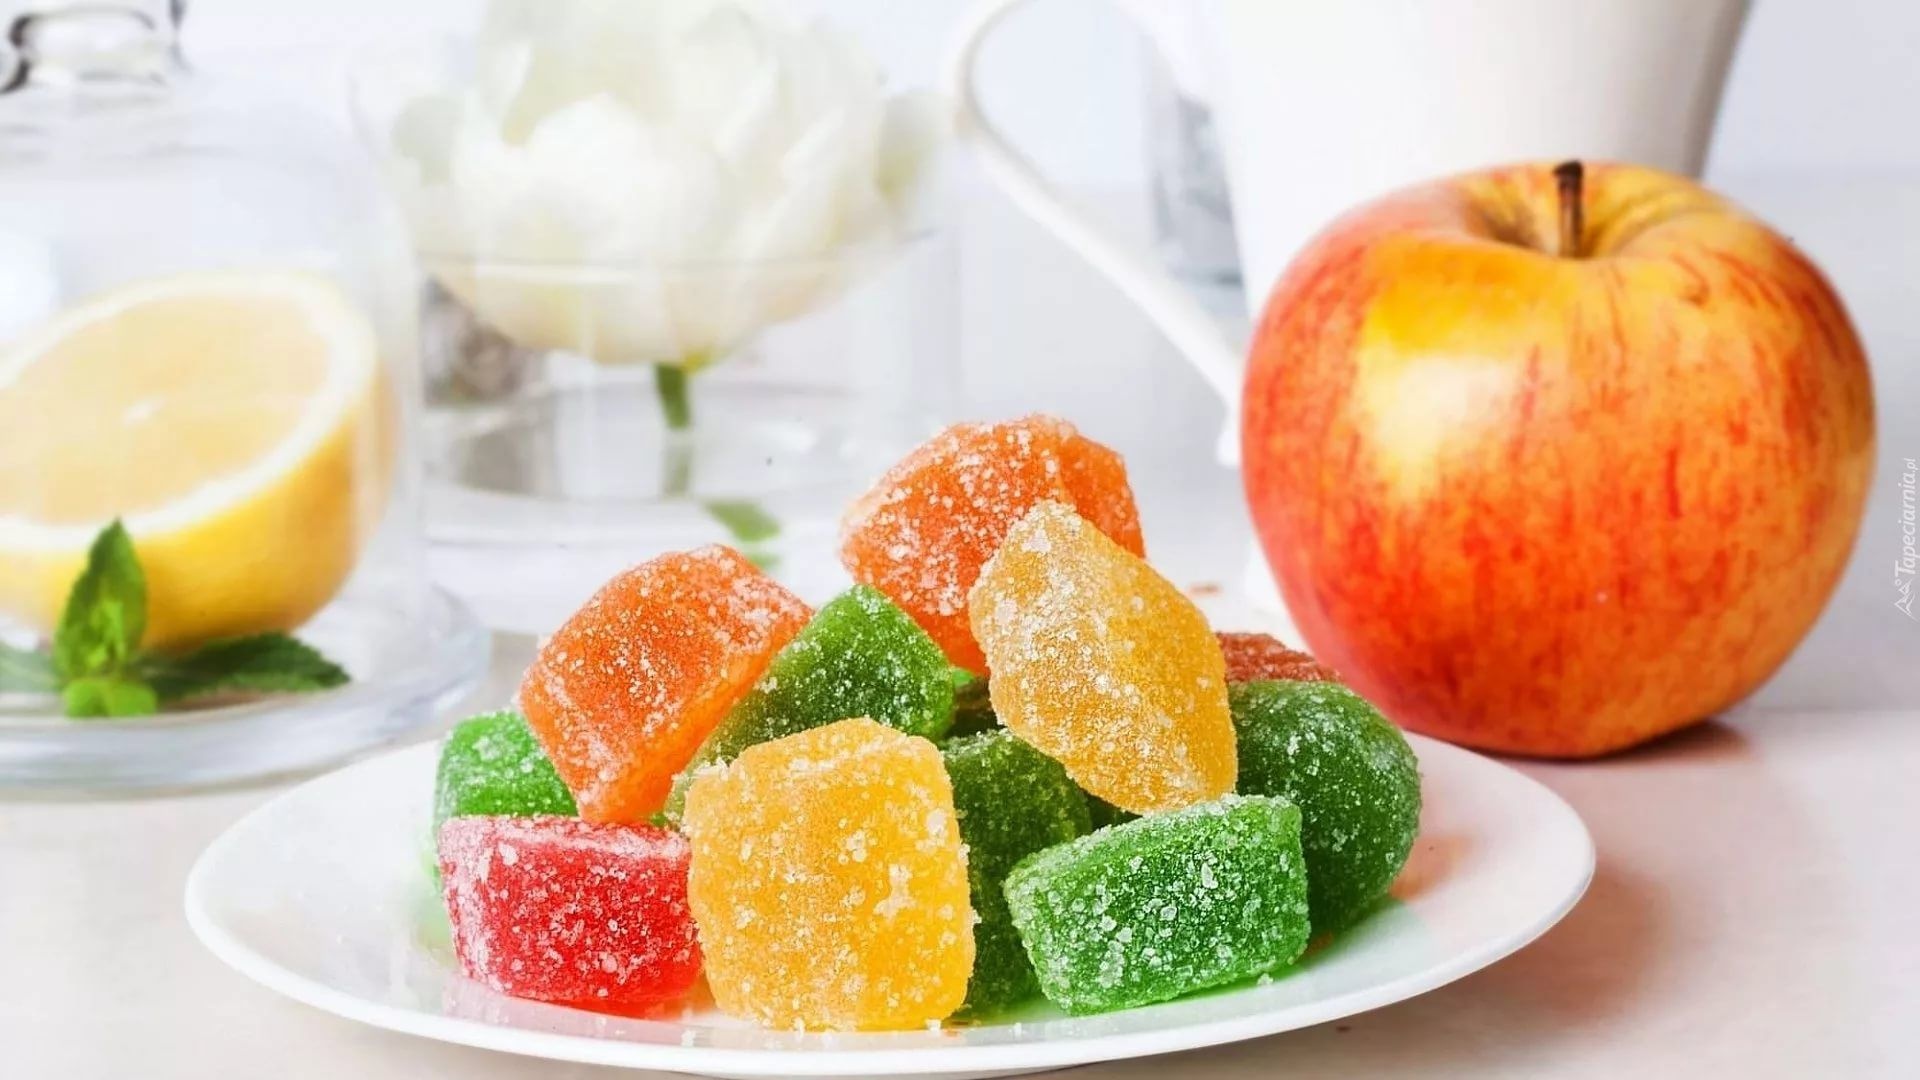 Jellylicious display, Gelatin treats, Colorful sweetness, Sugary delight, 1920x1080 Full HD Desktop